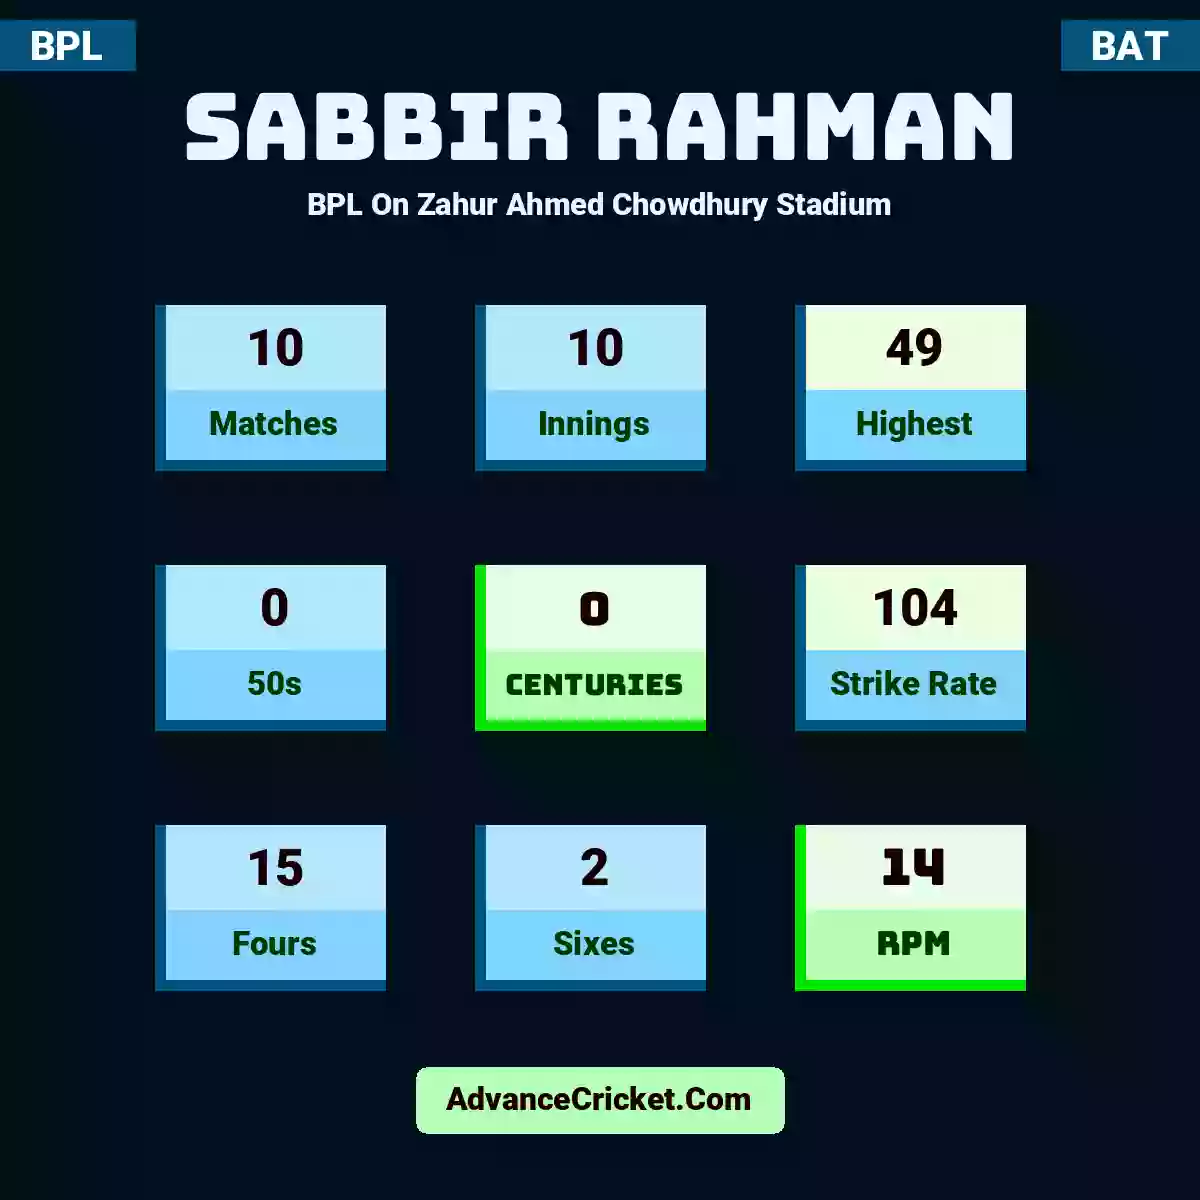 Sabbir Rahman BPL  On Zahur Ahmed Chowdhury Stadium, Sabbir Rahman played 10 matches, scored 49 runs as highest, 0 half-centuries, and 0 centuries, with a strike rate of 104. S.Rahman hit 15 fours and 2 sixes, with an RPM of 14.